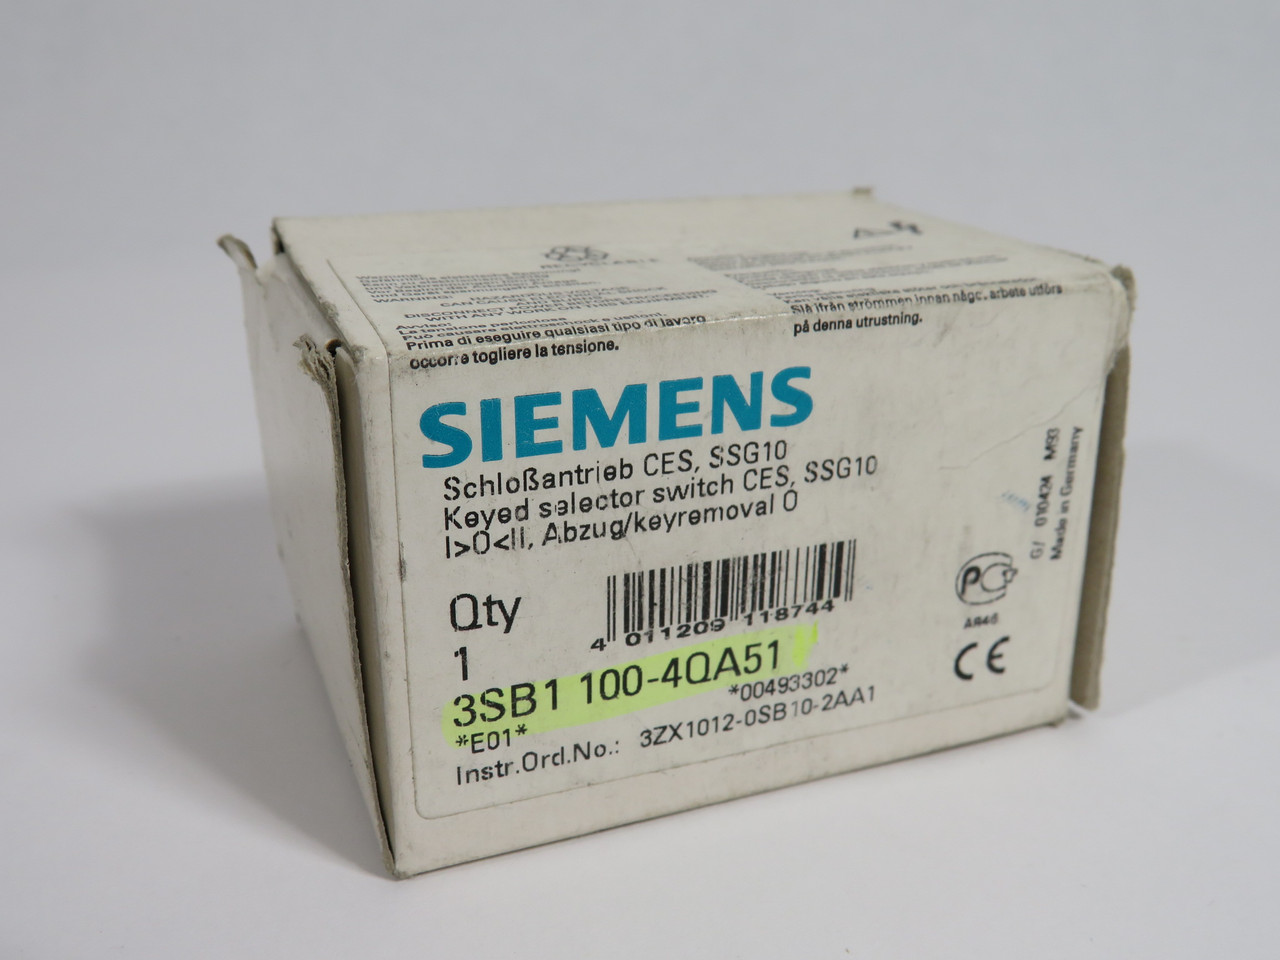 Siemens 3SB1100-4QA51 Keyed Selector Switch I-O-II Momentary C/W Keys NEW